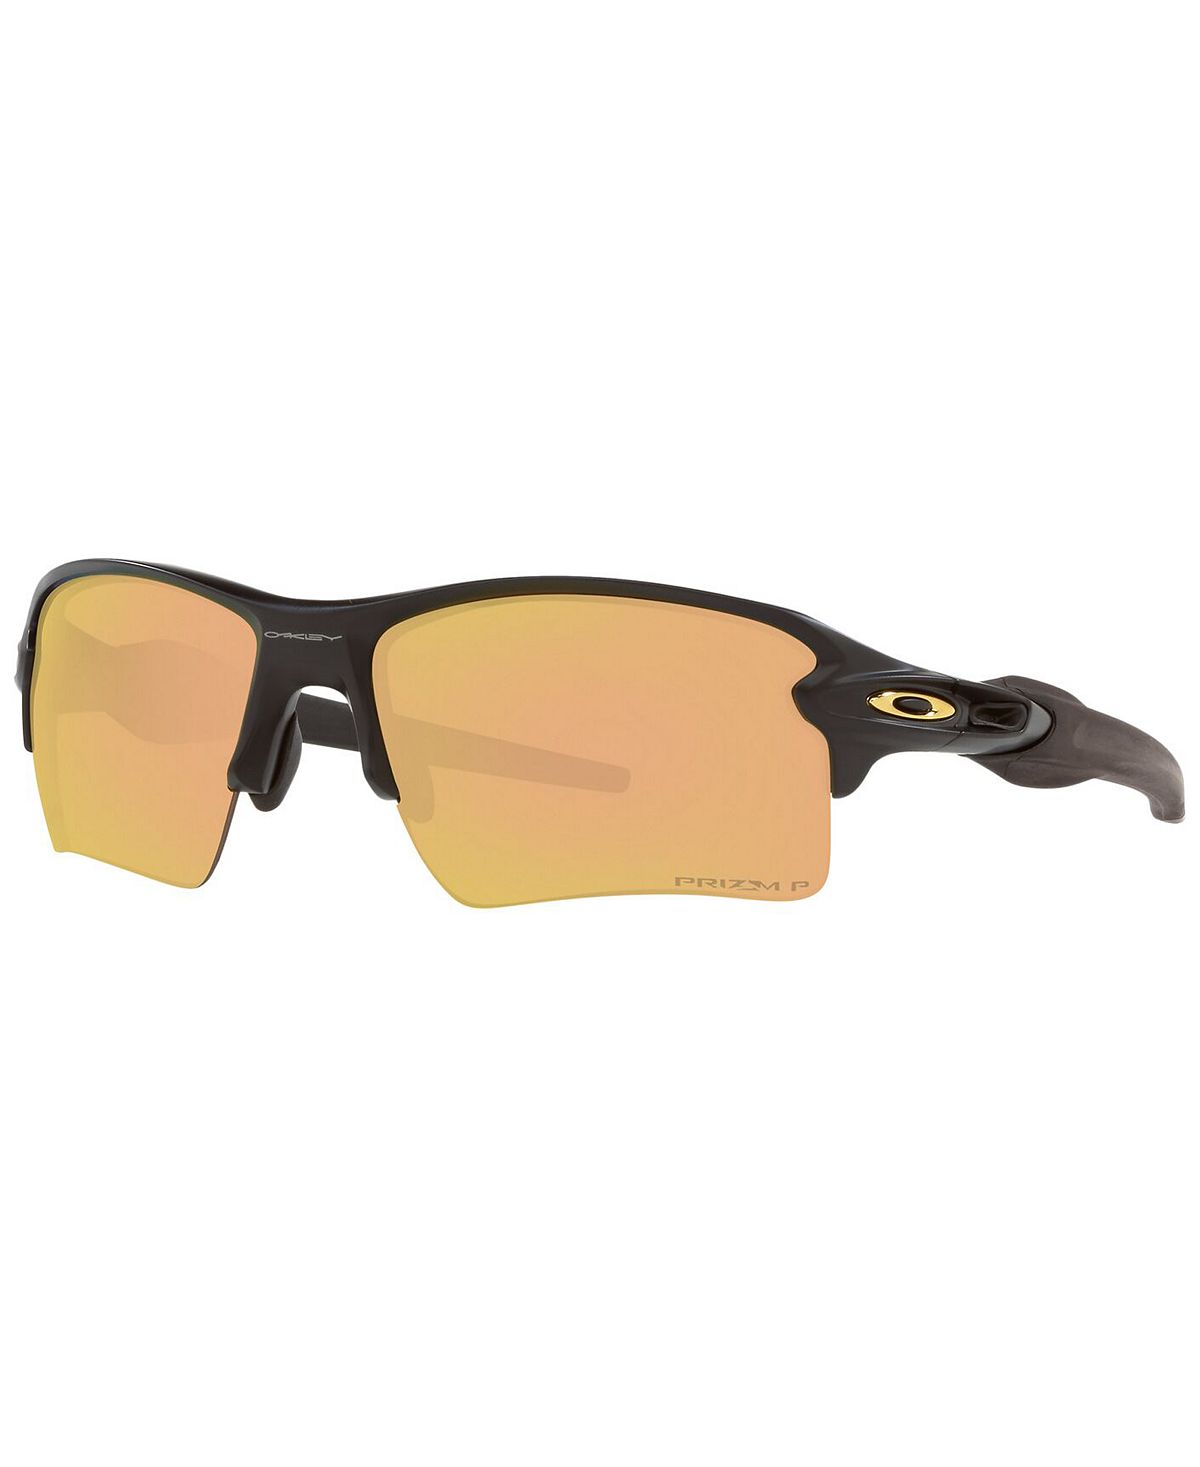 Поляризованные солнцезащитные очки Flak 2.0 XL Prizm, OO9188 Oakley цена и фото